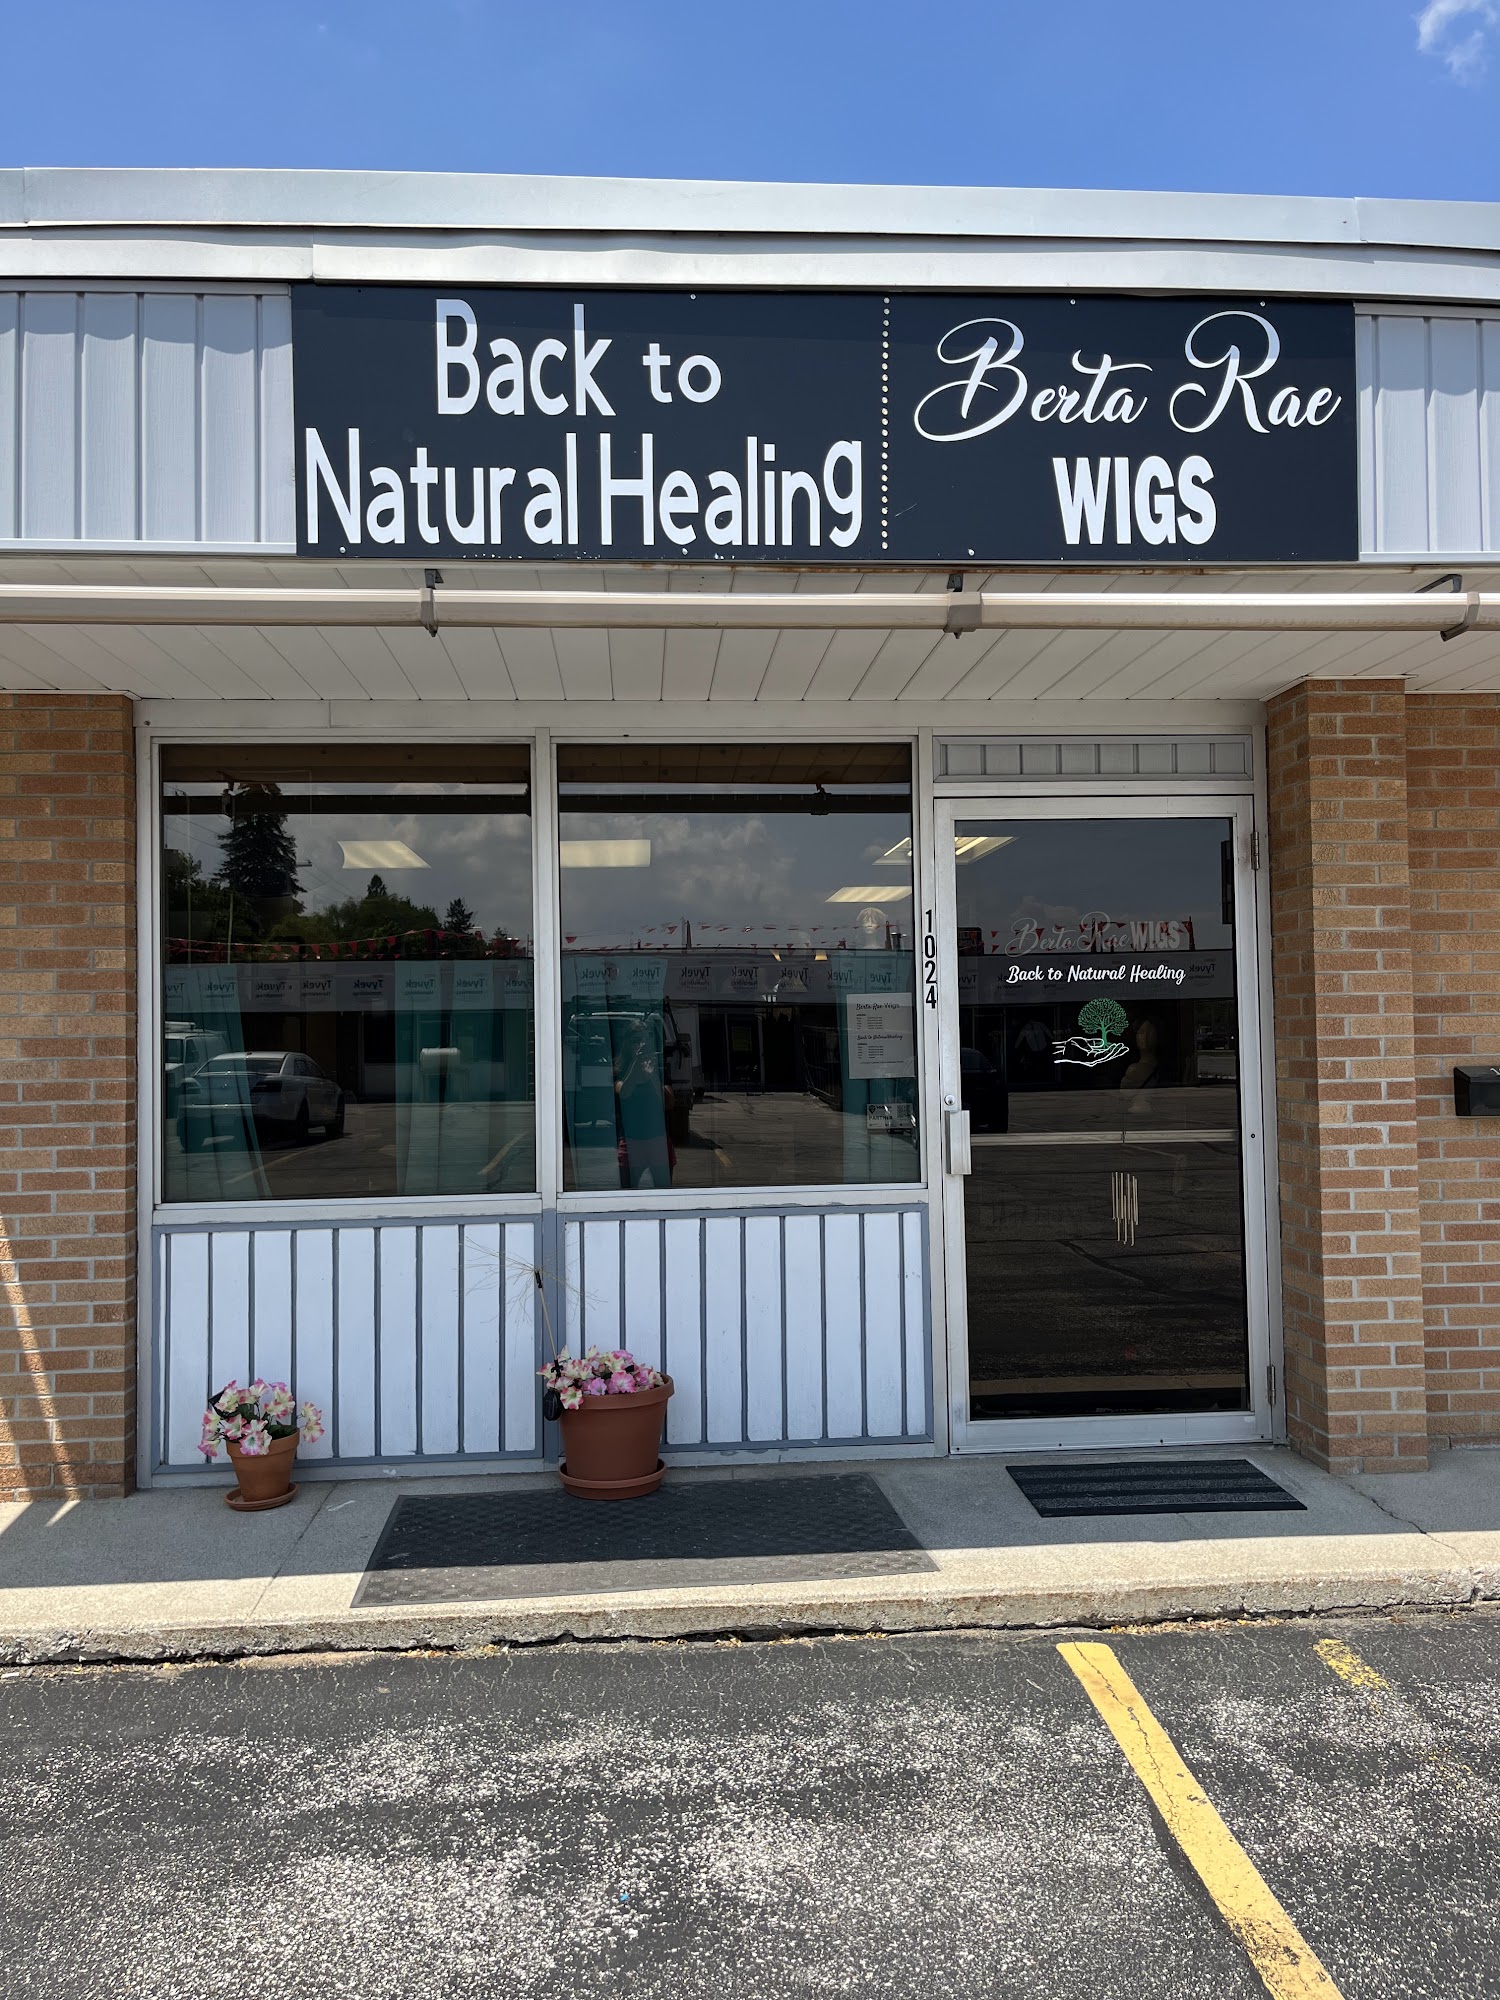 Back to Natural Healing | Berta Rae Wigs